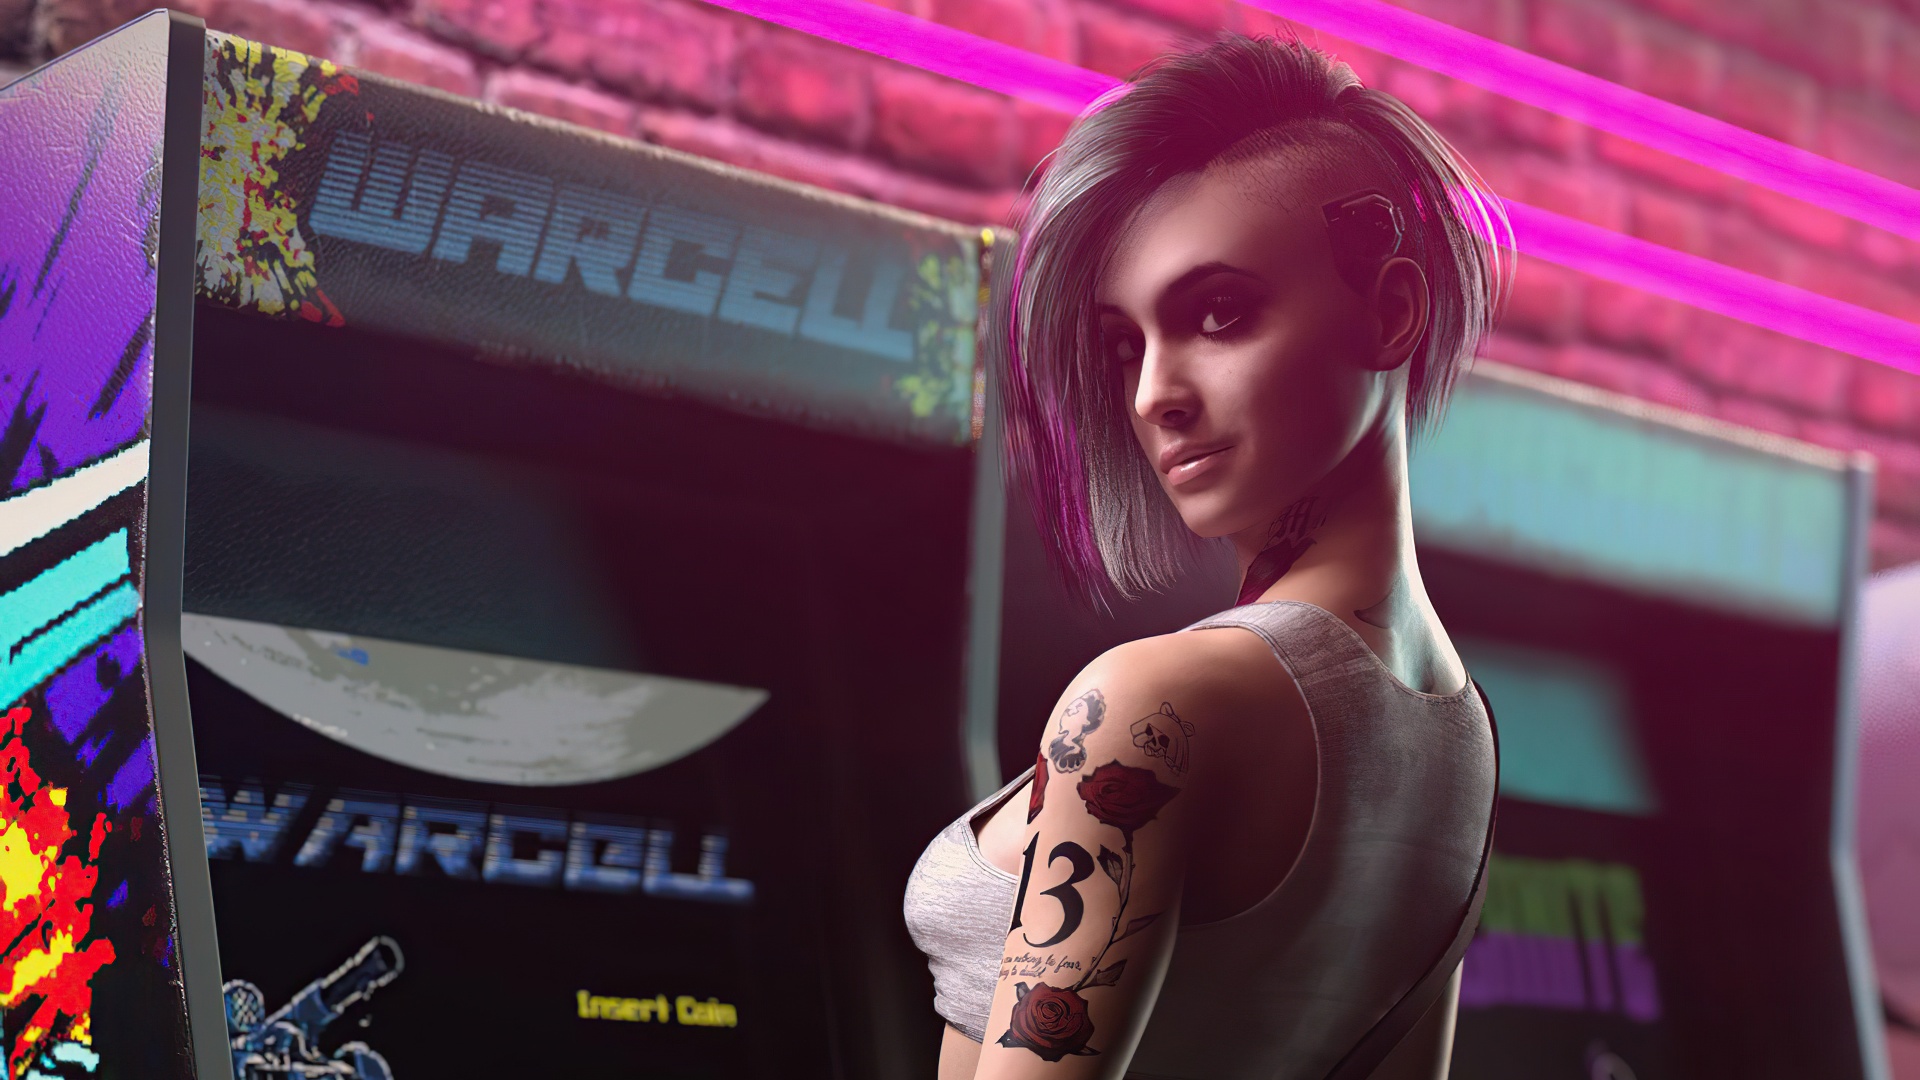 Download Cyberpunk Girl 1920 X 1080 Gaming Wallpaper